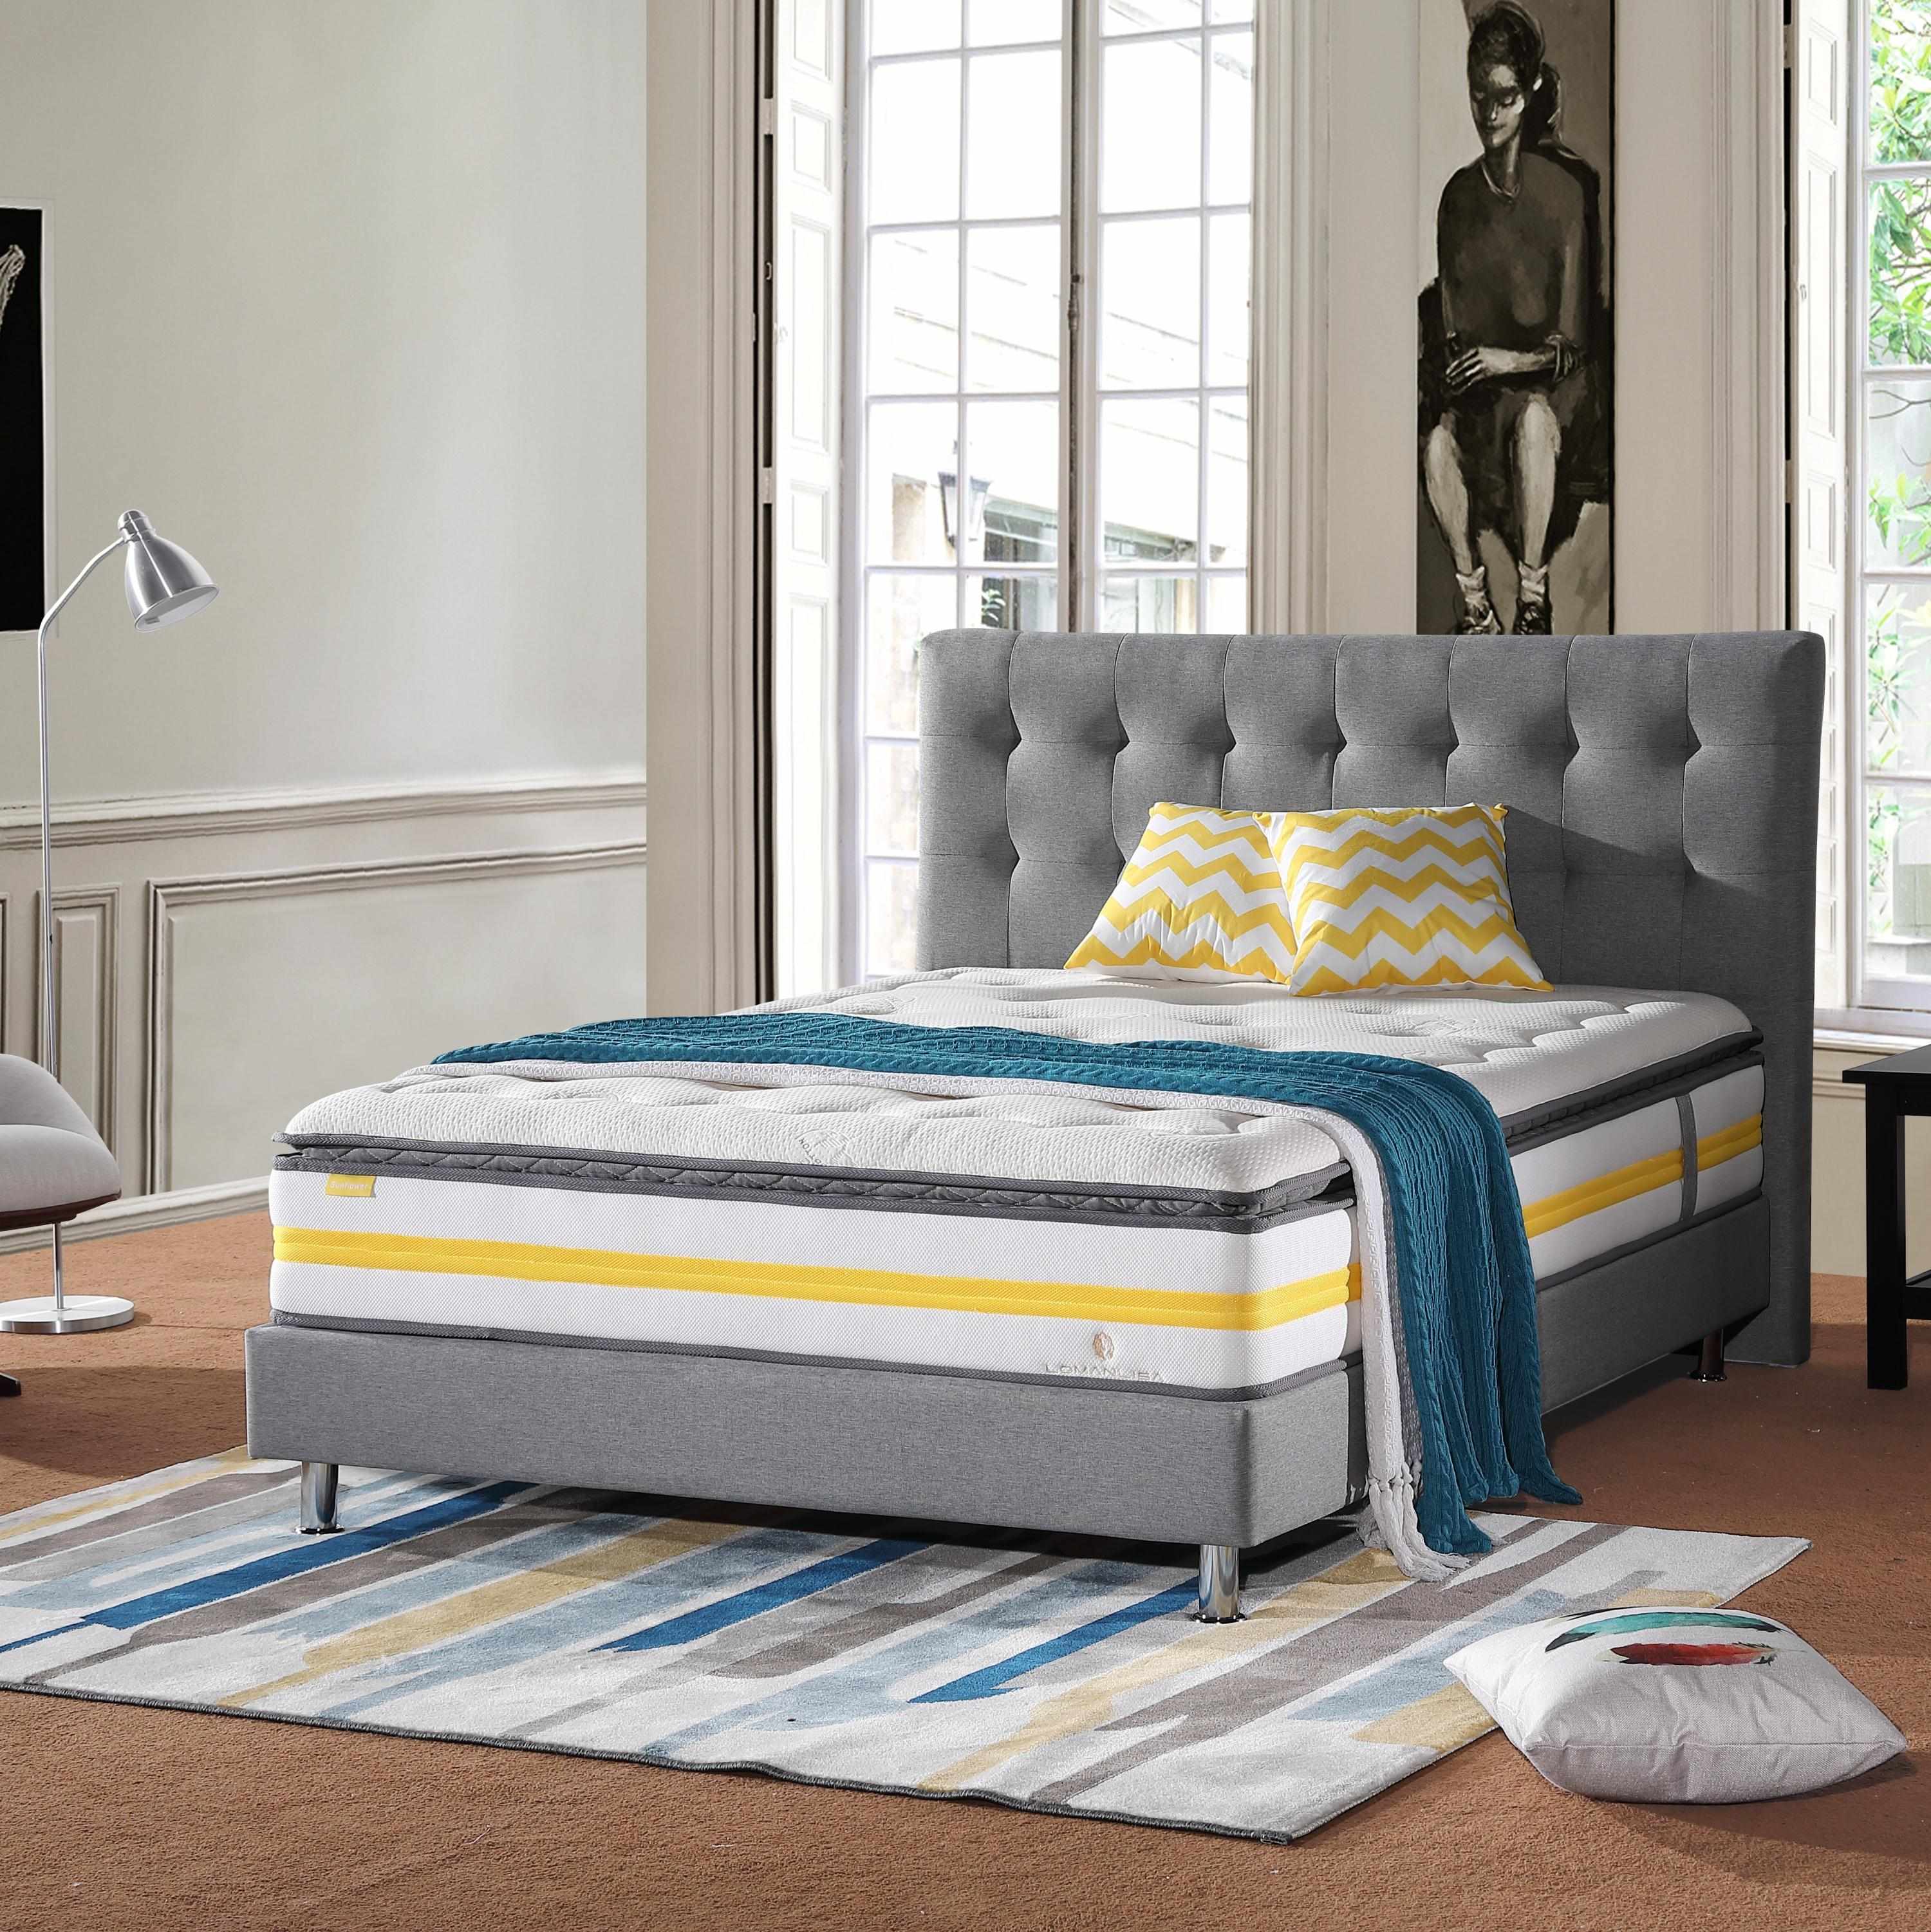 JLH reasonable innerspring hybrid mattress Comfortable Series for hotel-1